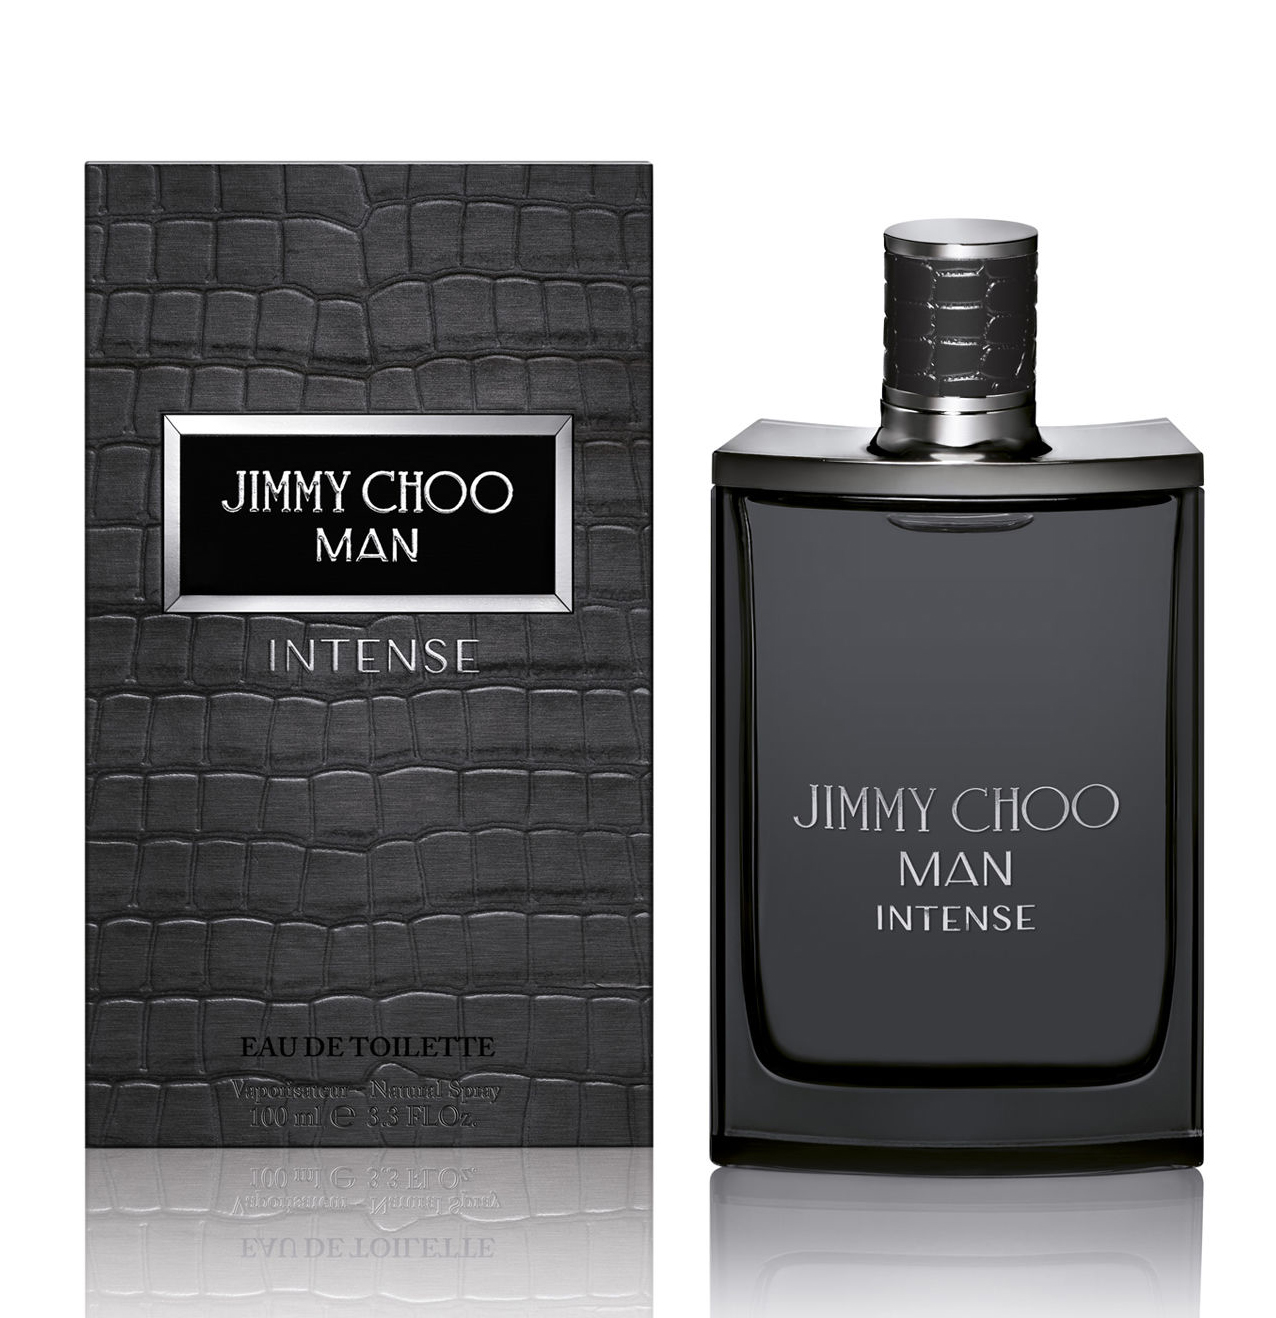 Jimmy Choo Man Intense Jimmy Choo cologne a new fragrance for men 2016